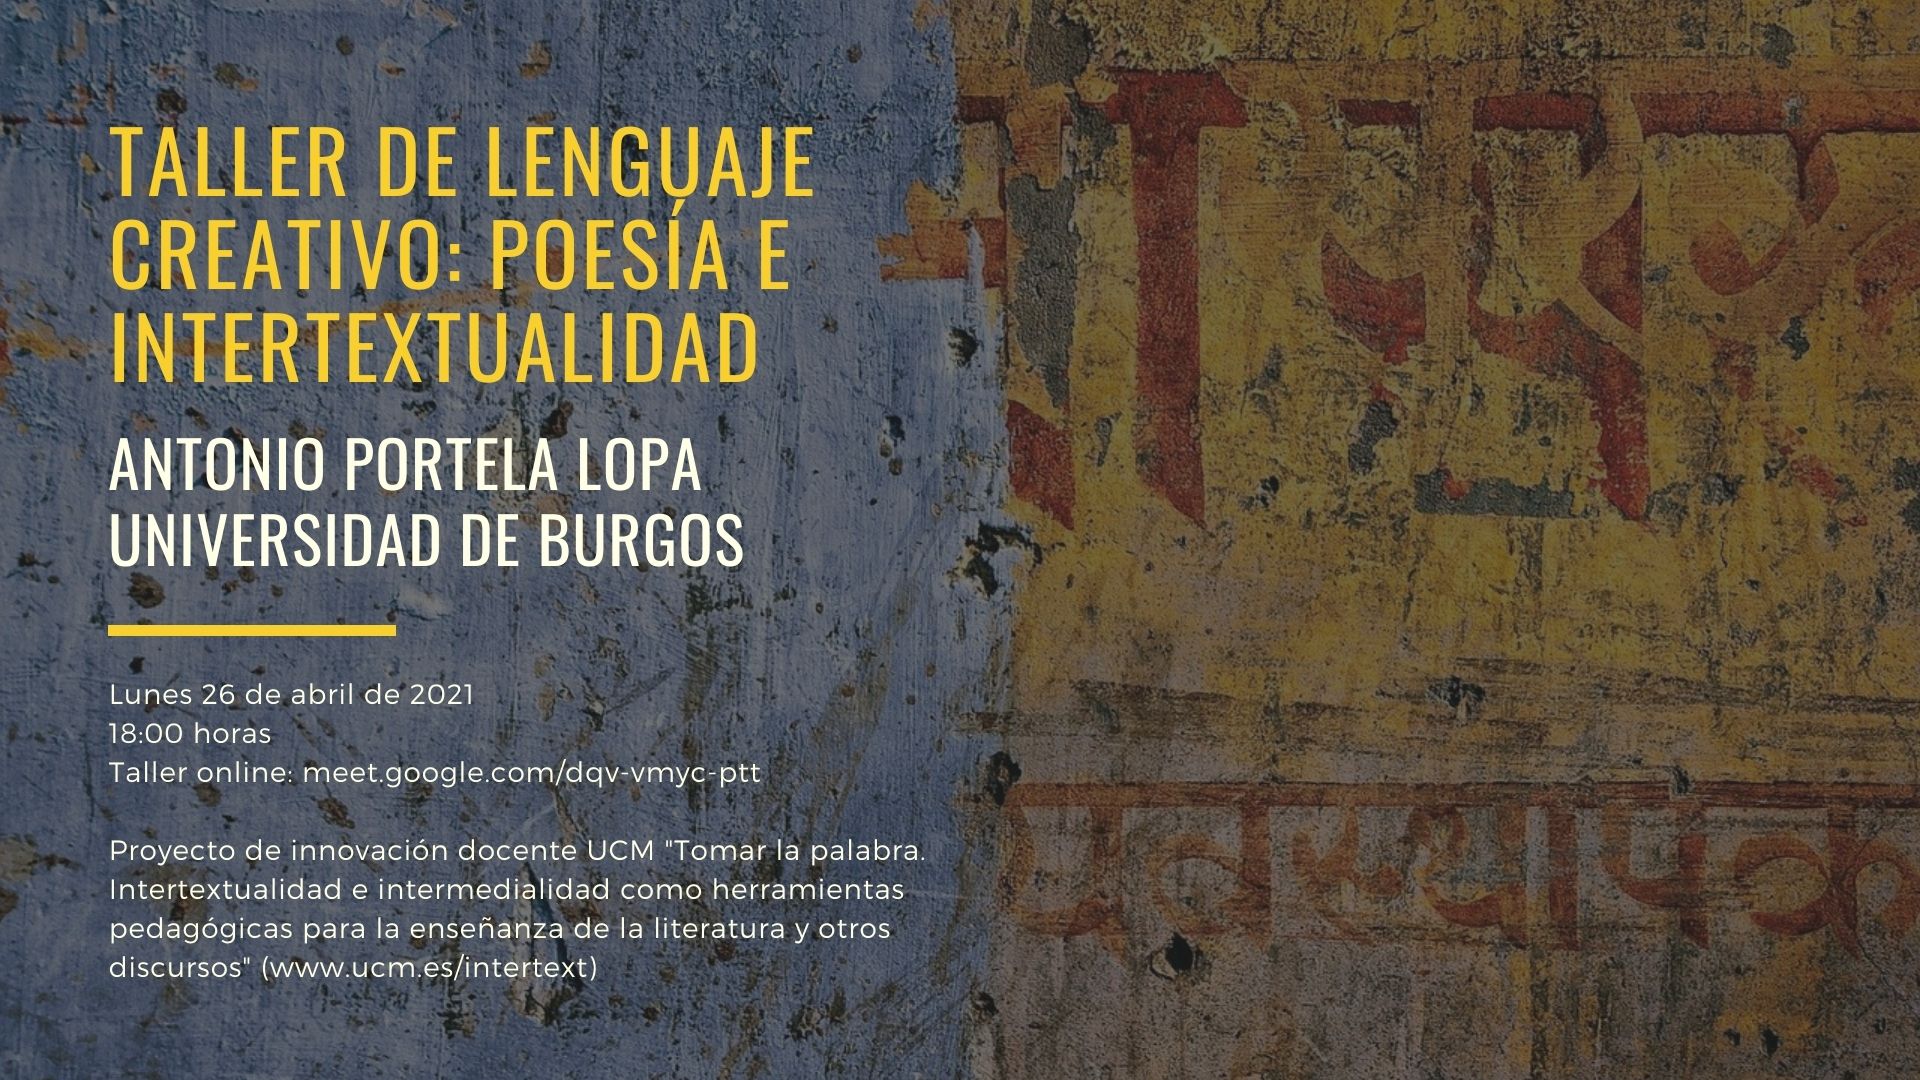 Antonio Portela Lopa, "Taller de lenguaje creativo: poesía e intertextualidad"